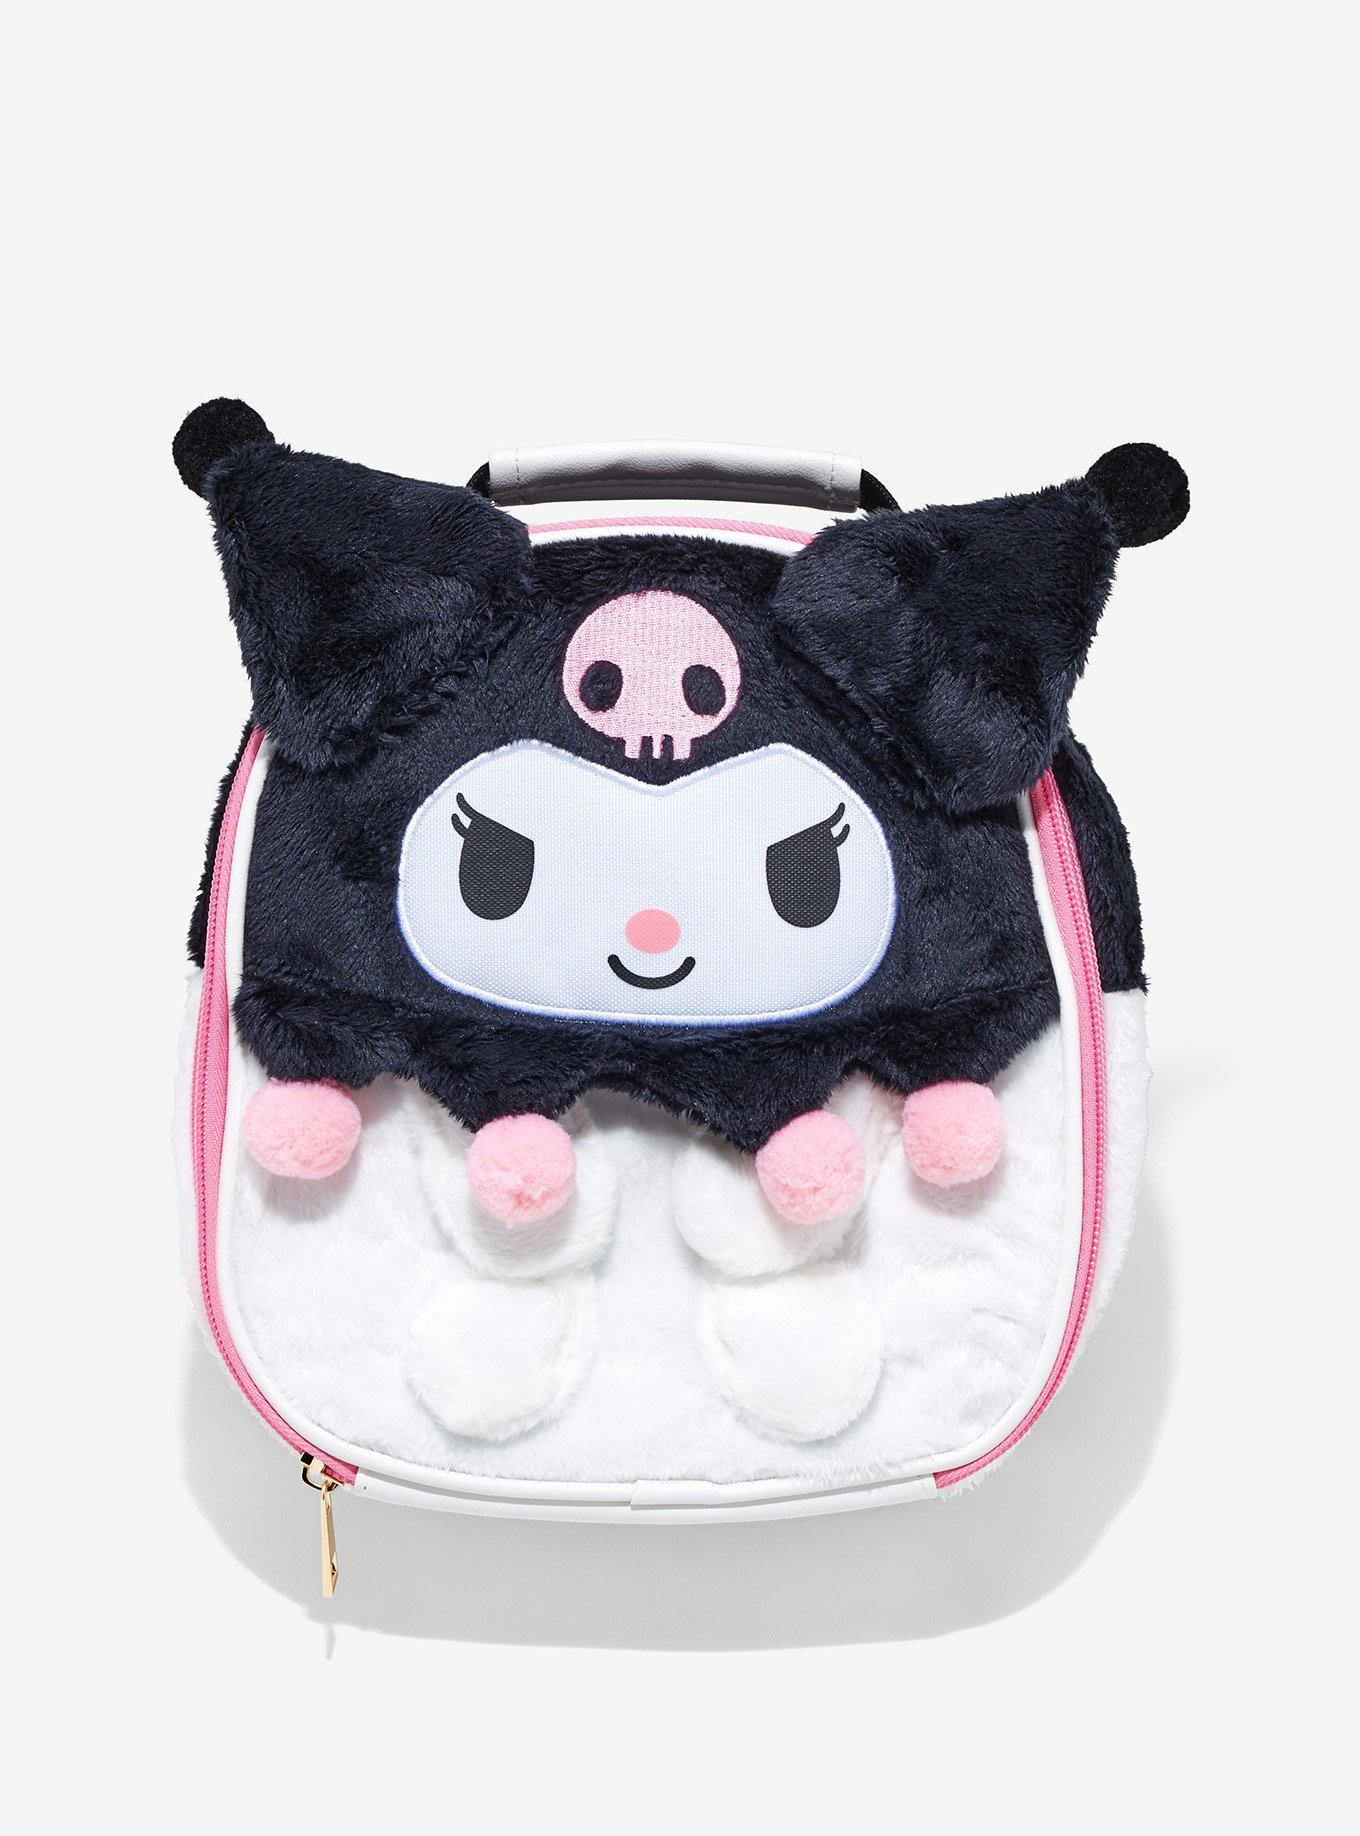 Kawaii Kirby Anime Cartoon Plush Doll Lunch Bag Picnic Travel Pouch  Handbags Lunch Box Tote Bags mummy bag Girls Gift